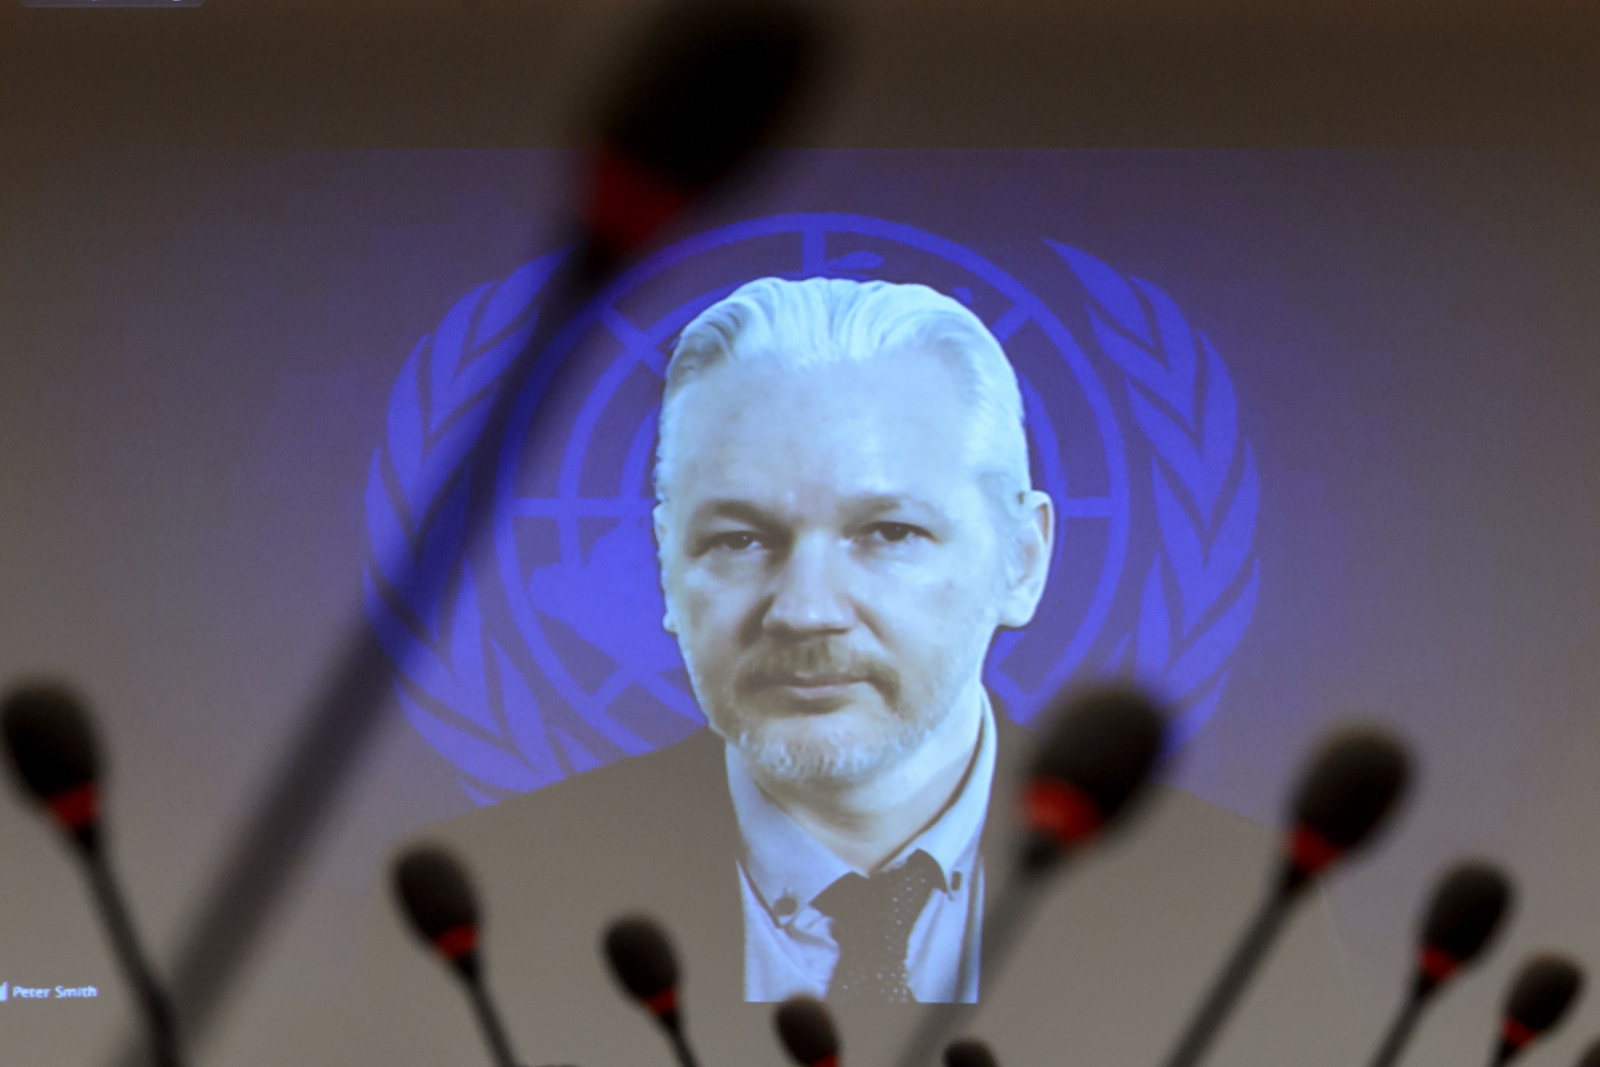 Julian Assange Proves He’s Alive Using The Bitcoin Blockchain